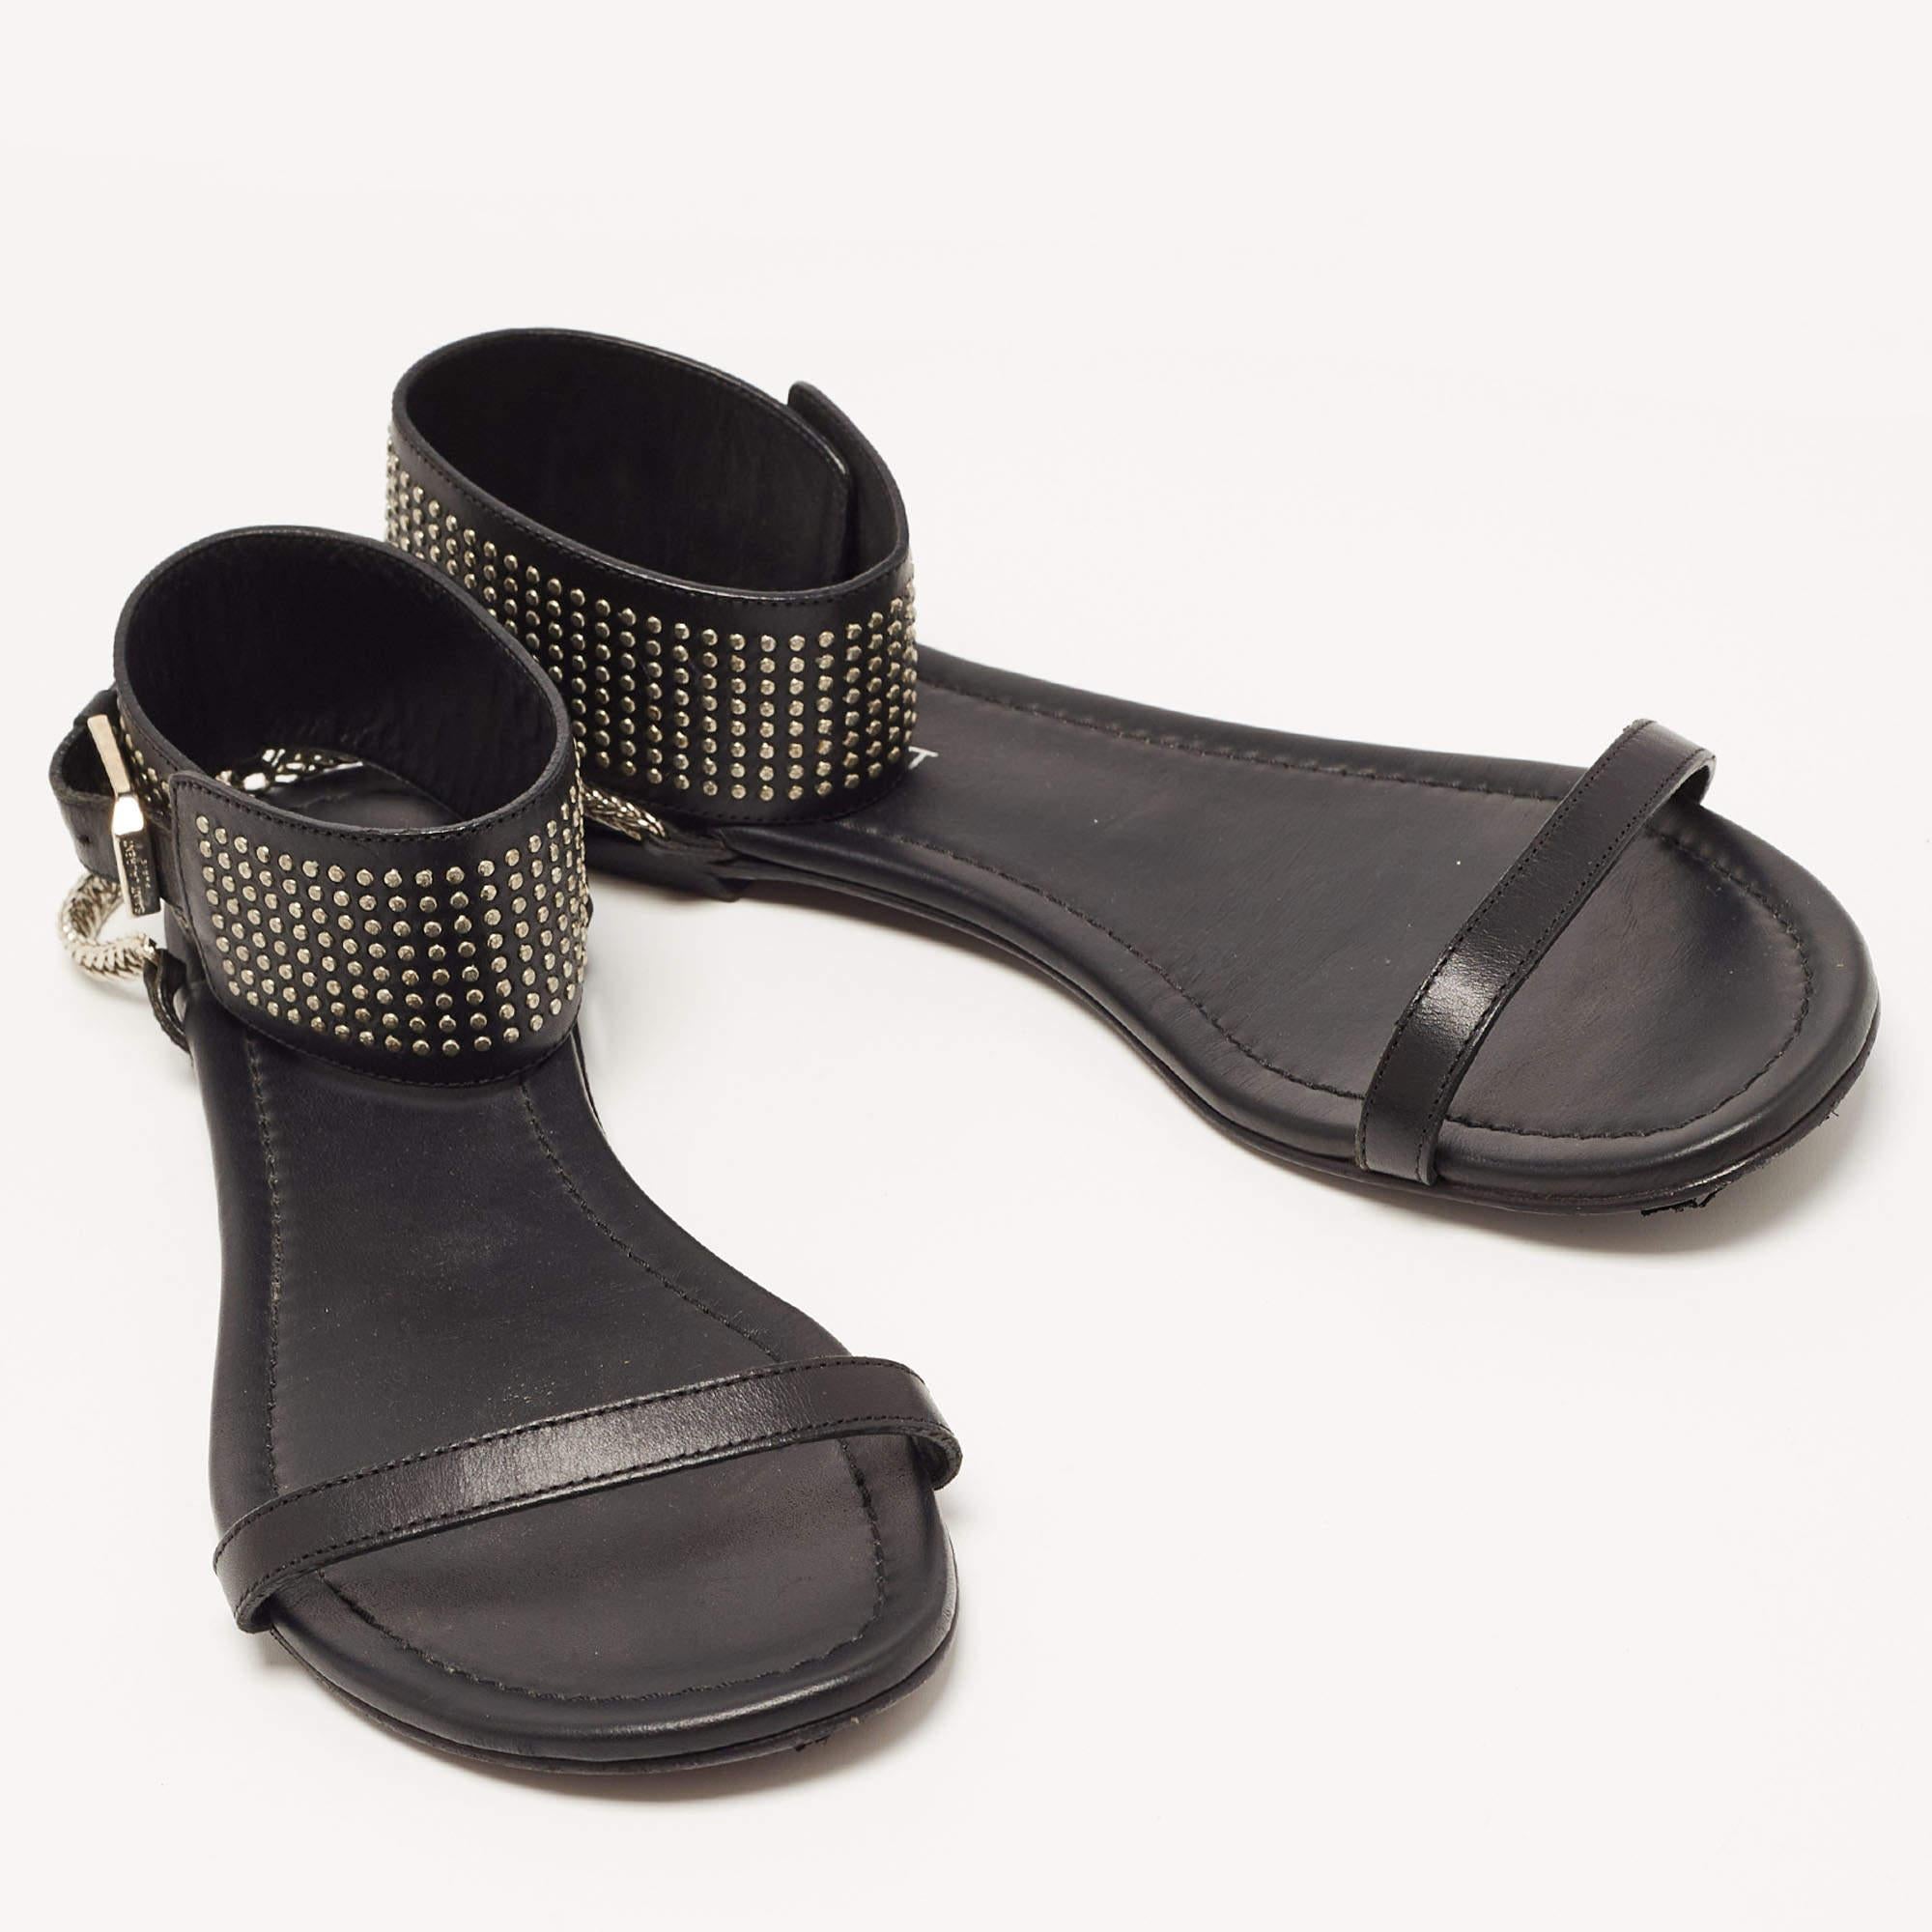 Saint Laurent Black Leather Studded Ankle Cuff Flat Sandals Size 36 For Sale 1